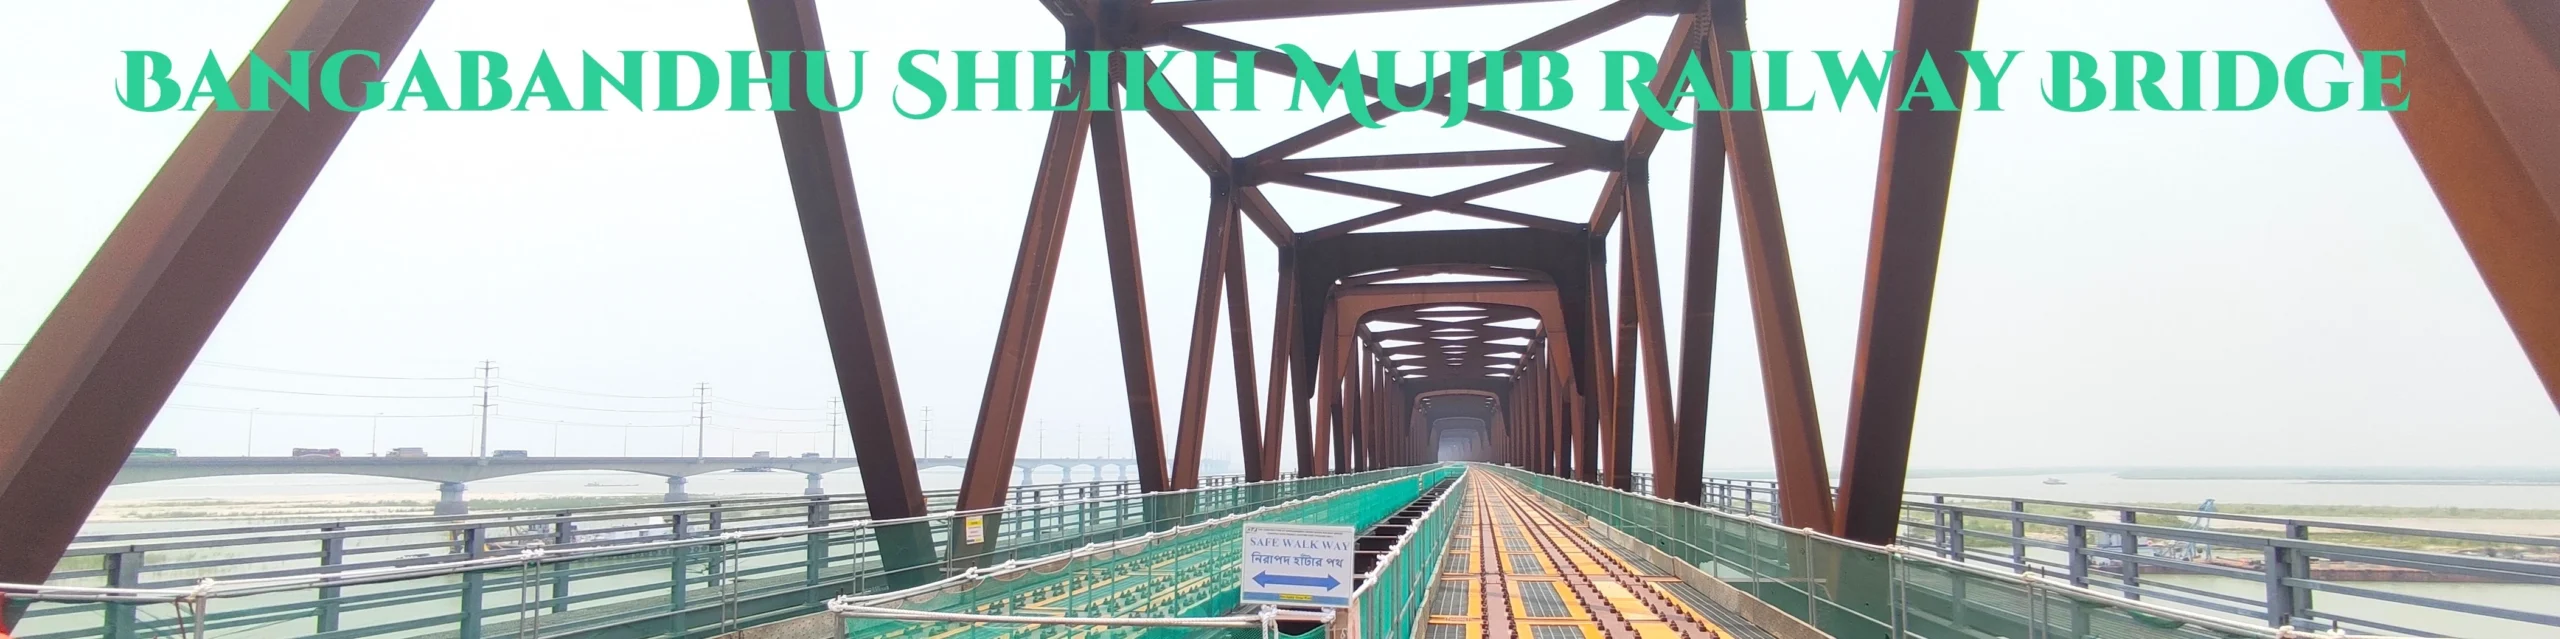 Bangabandhu Sheikh Mujib Railway Bridge